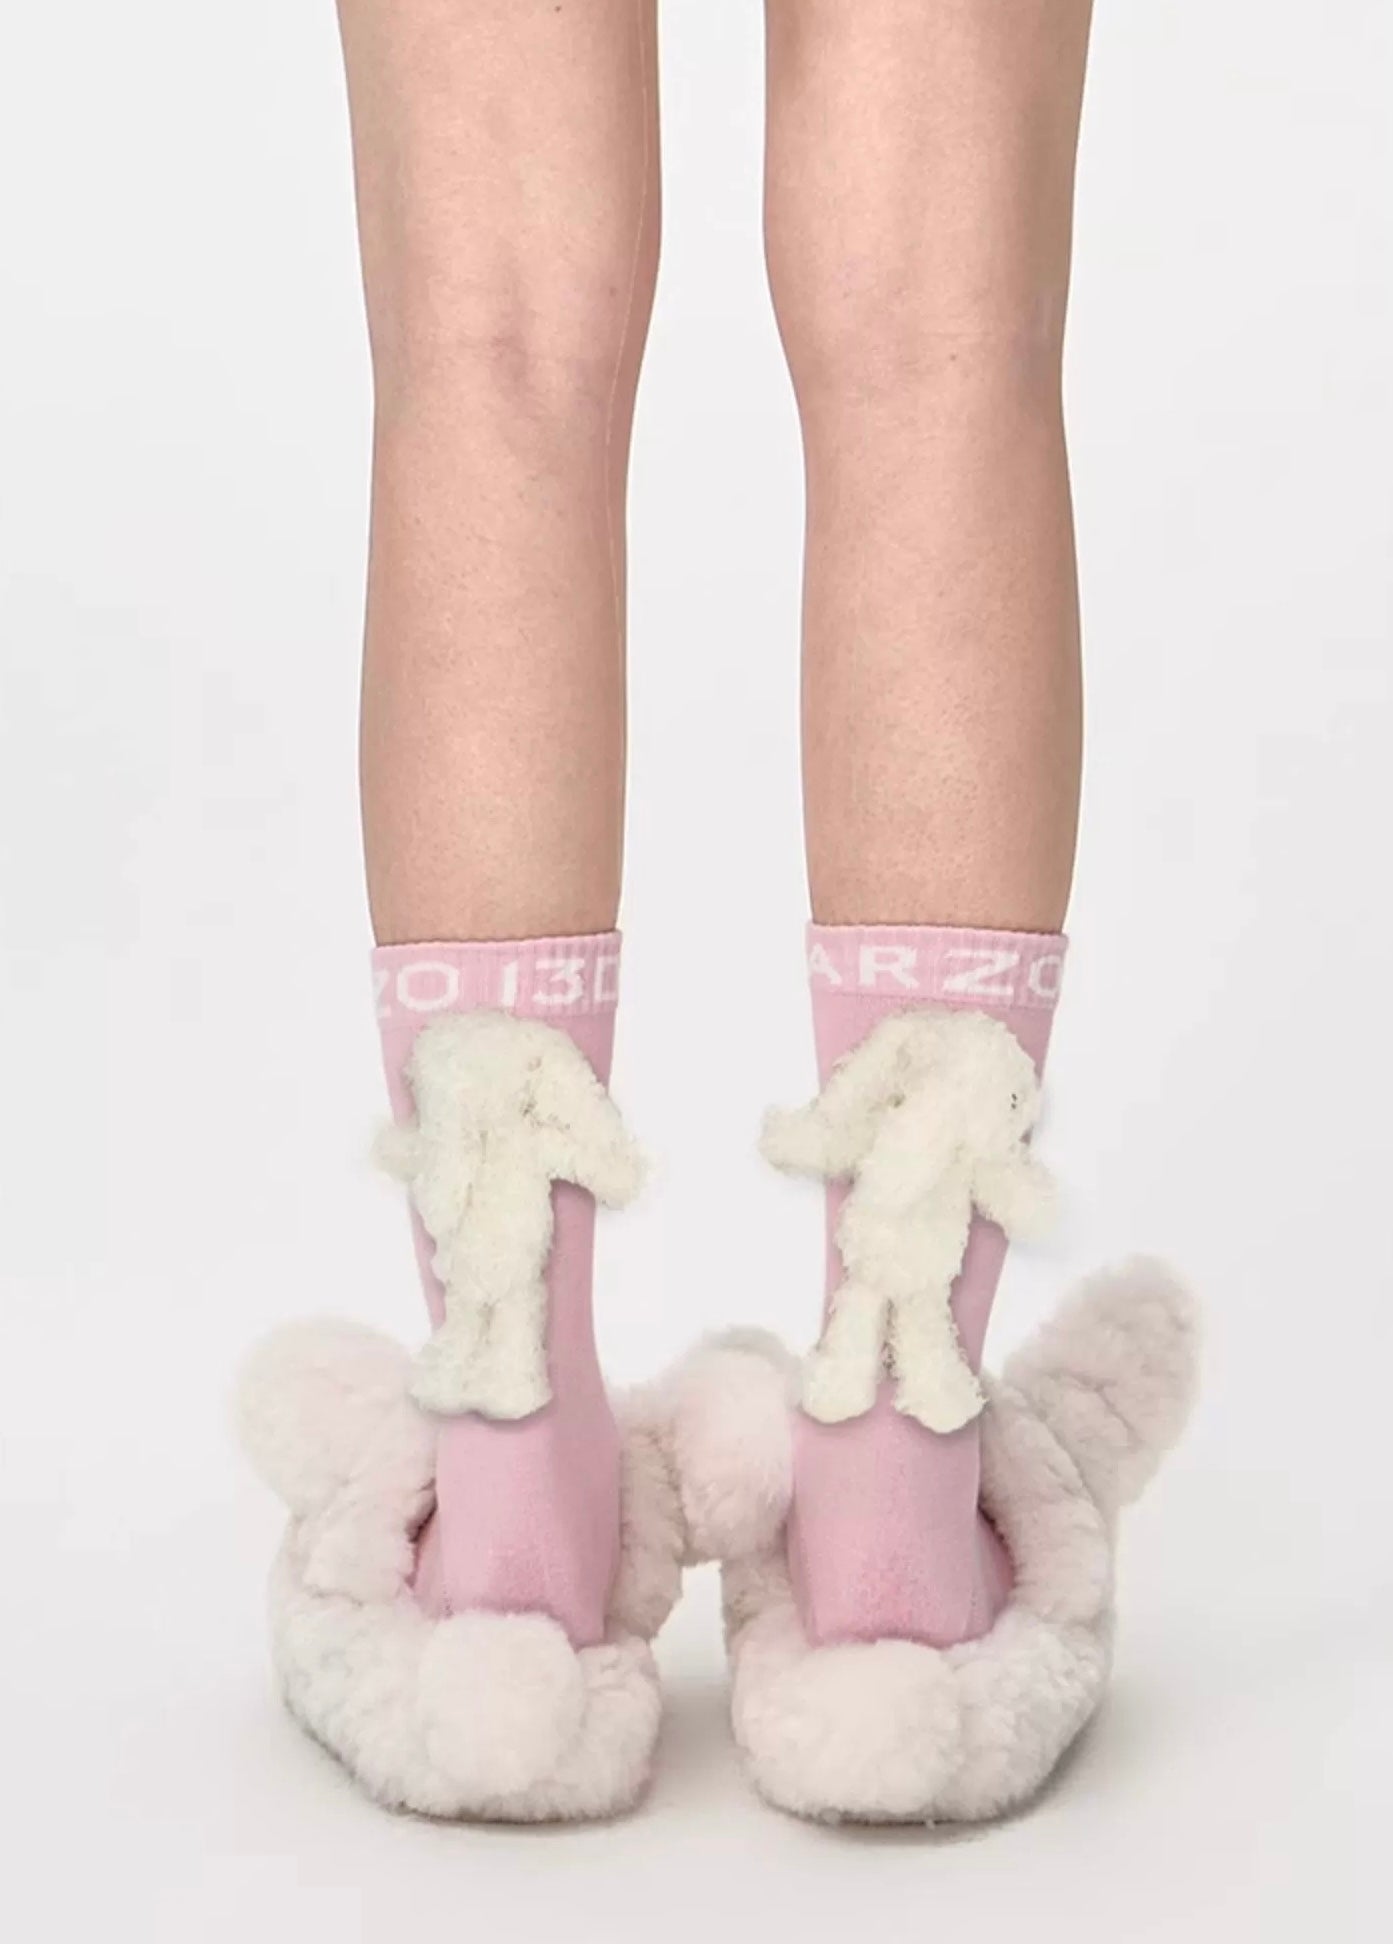 13DE MARZO Base Stacked Socks Pink & Khaki